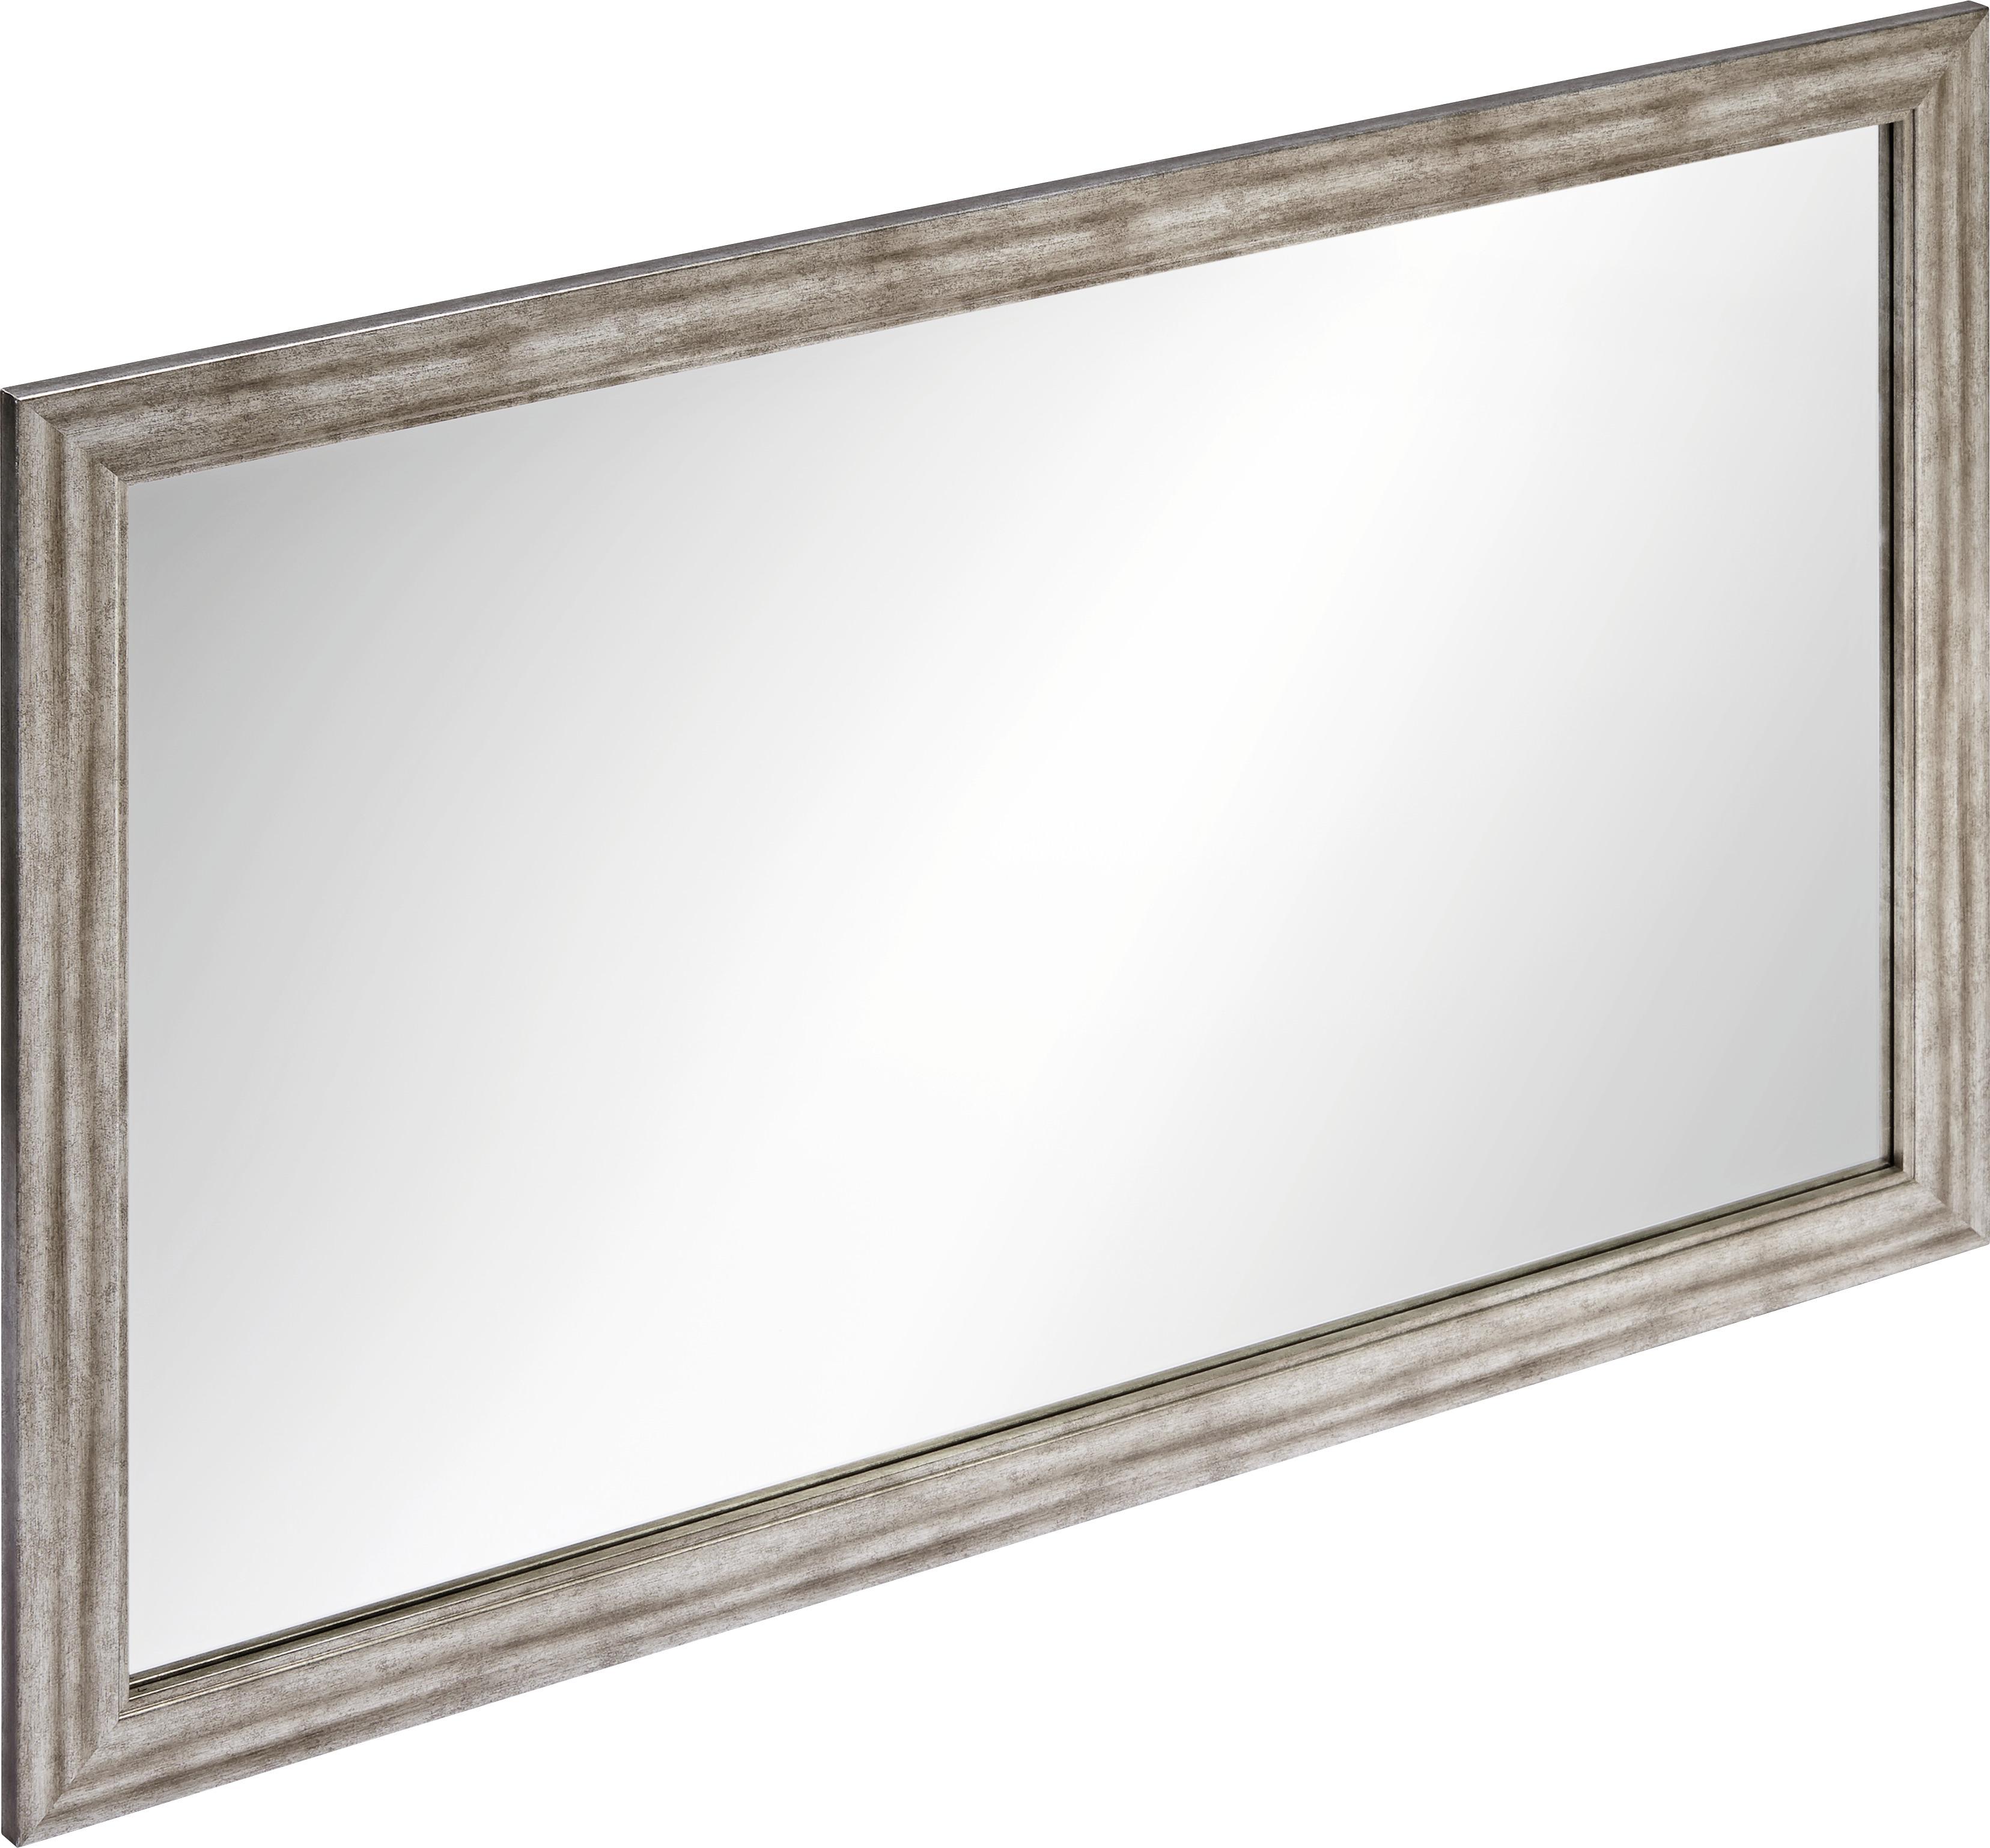 OGLEDALO ZIDNO METALLIC - srebrne boje/boje nikla, Romantik / Landhaus, drvni materijal (70/110cm)